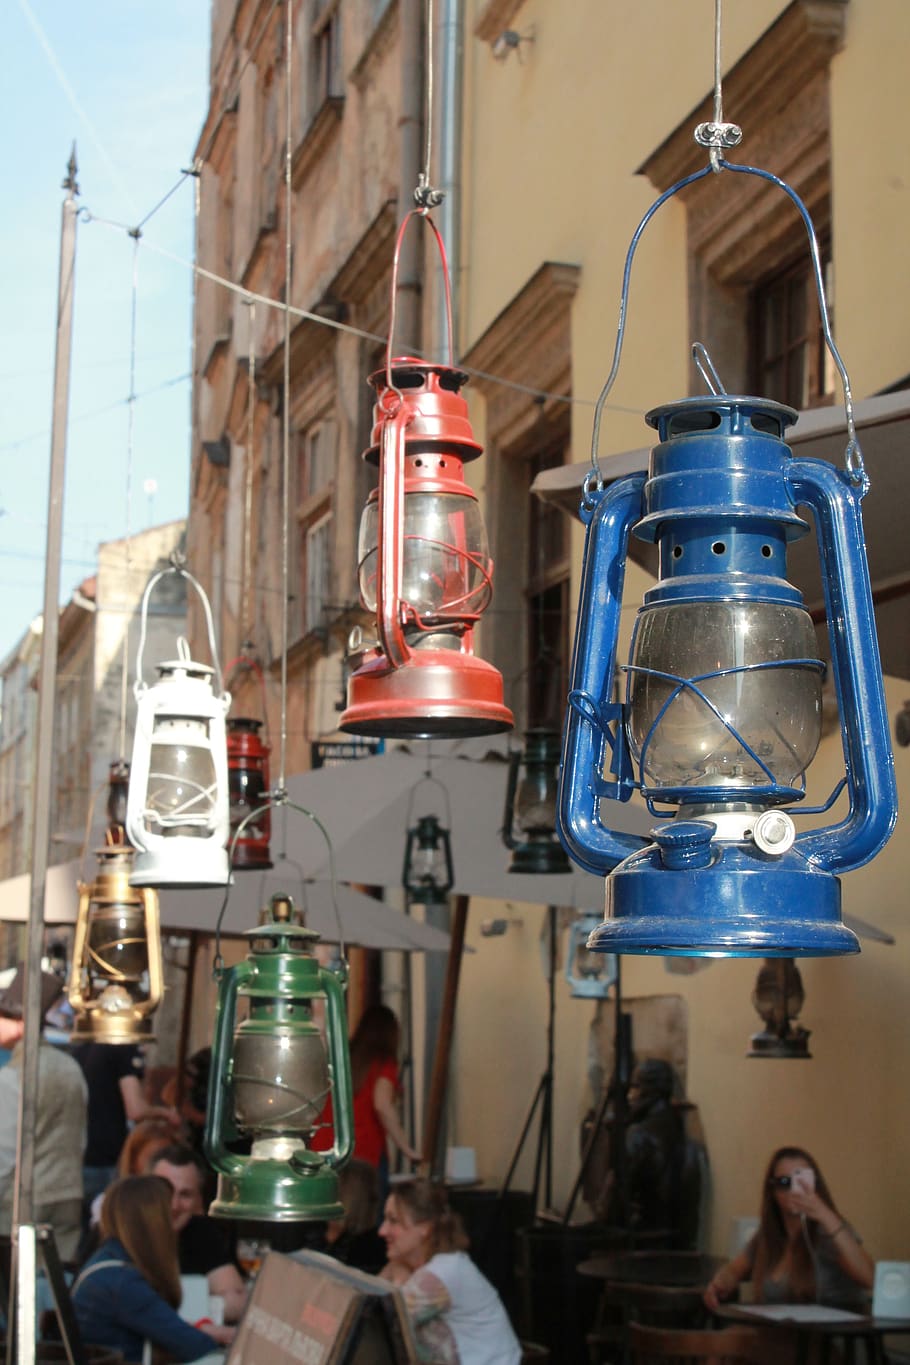 cahaya, jalan, ornamen, ukraina, lviv, café, lampu, barang-barang lama, lampu minyak tanah, roman